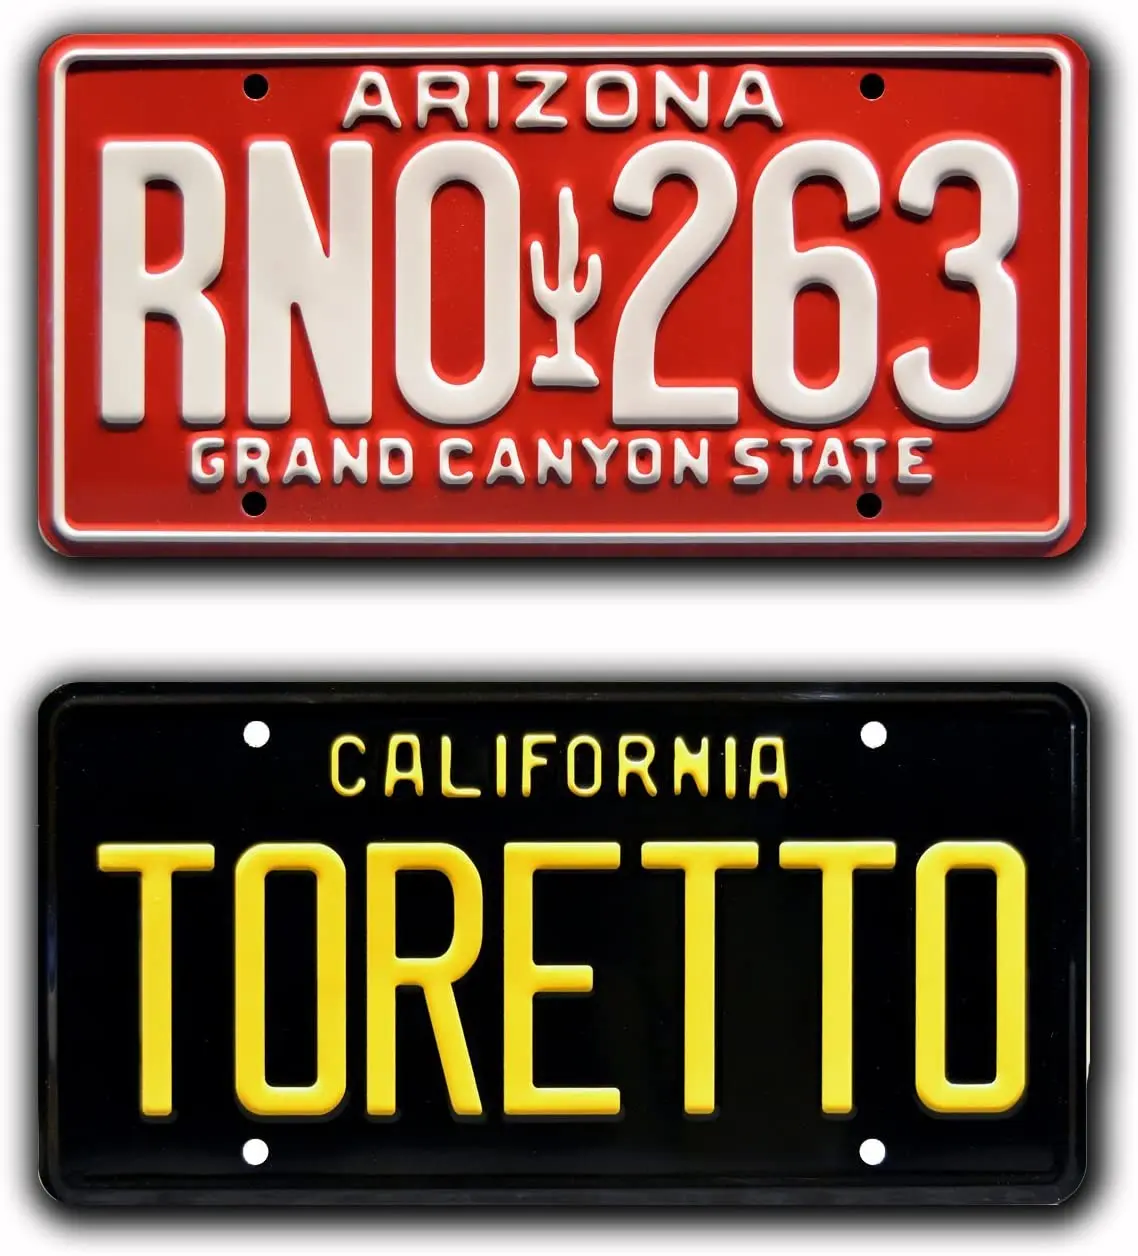 

Celebrity Machines Fast & Furious | Toretto + RNO 263 | Metal License Plates 1